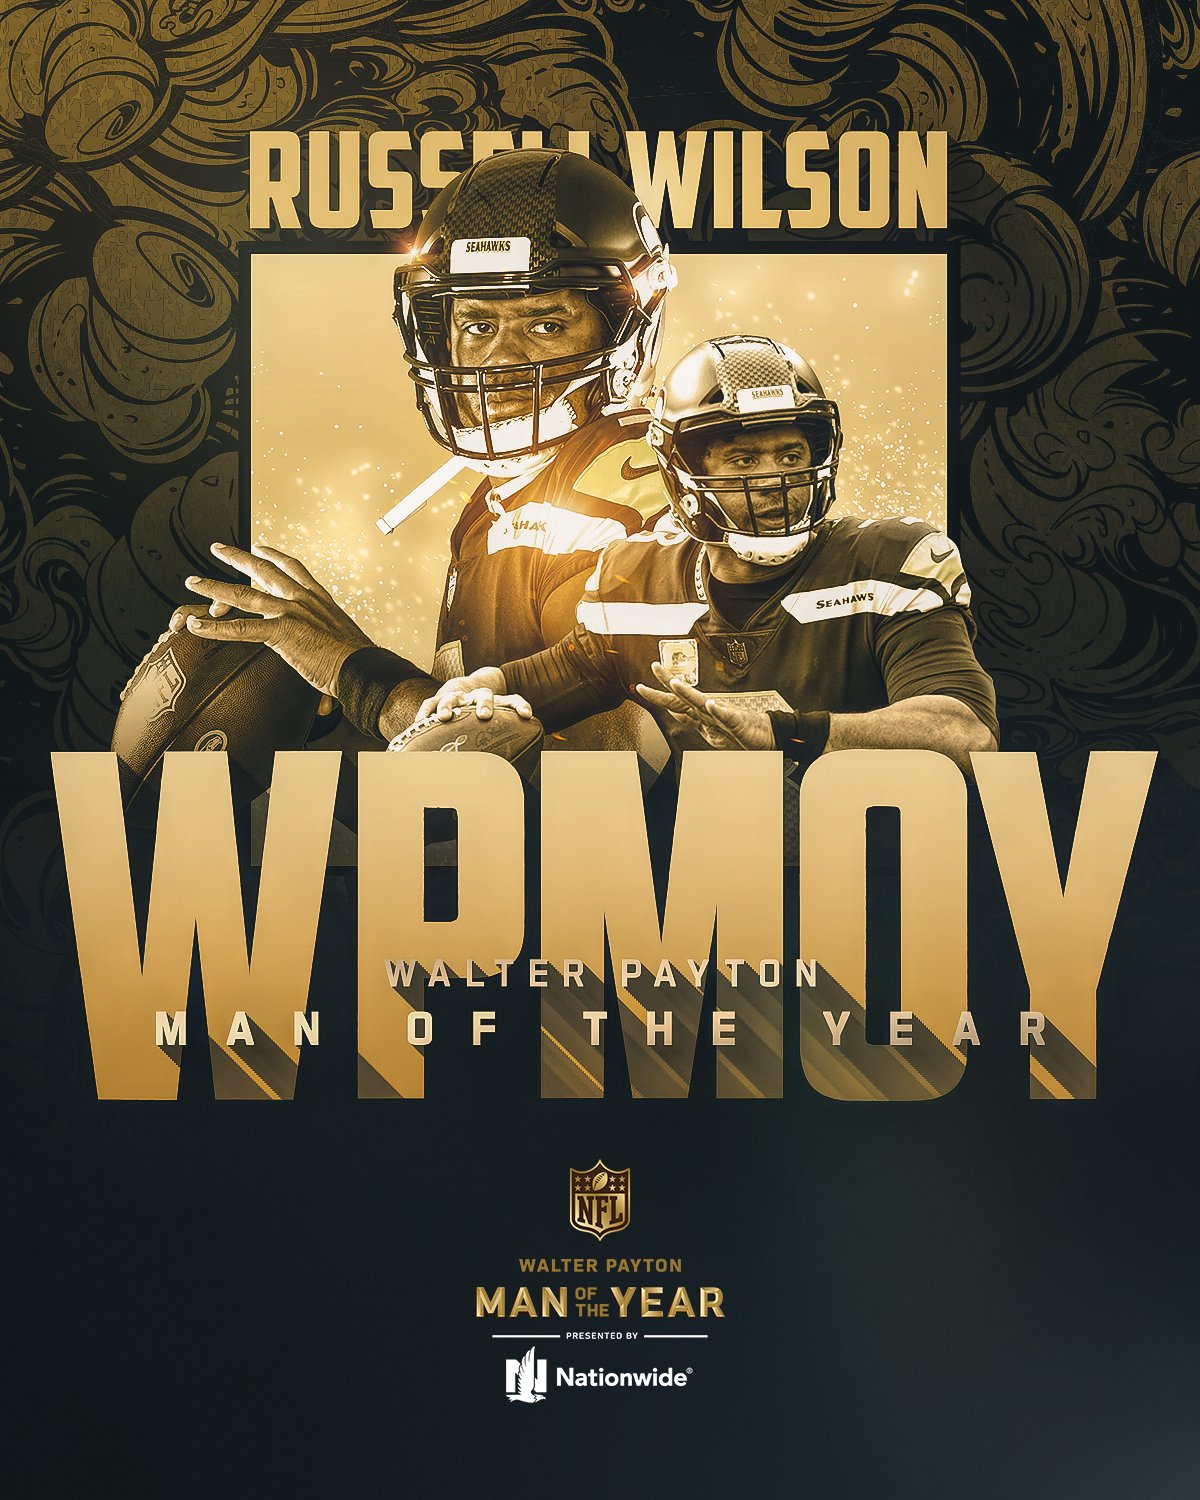 Walter Payton Man of the Year: QB Russell Wilson, Seahawks